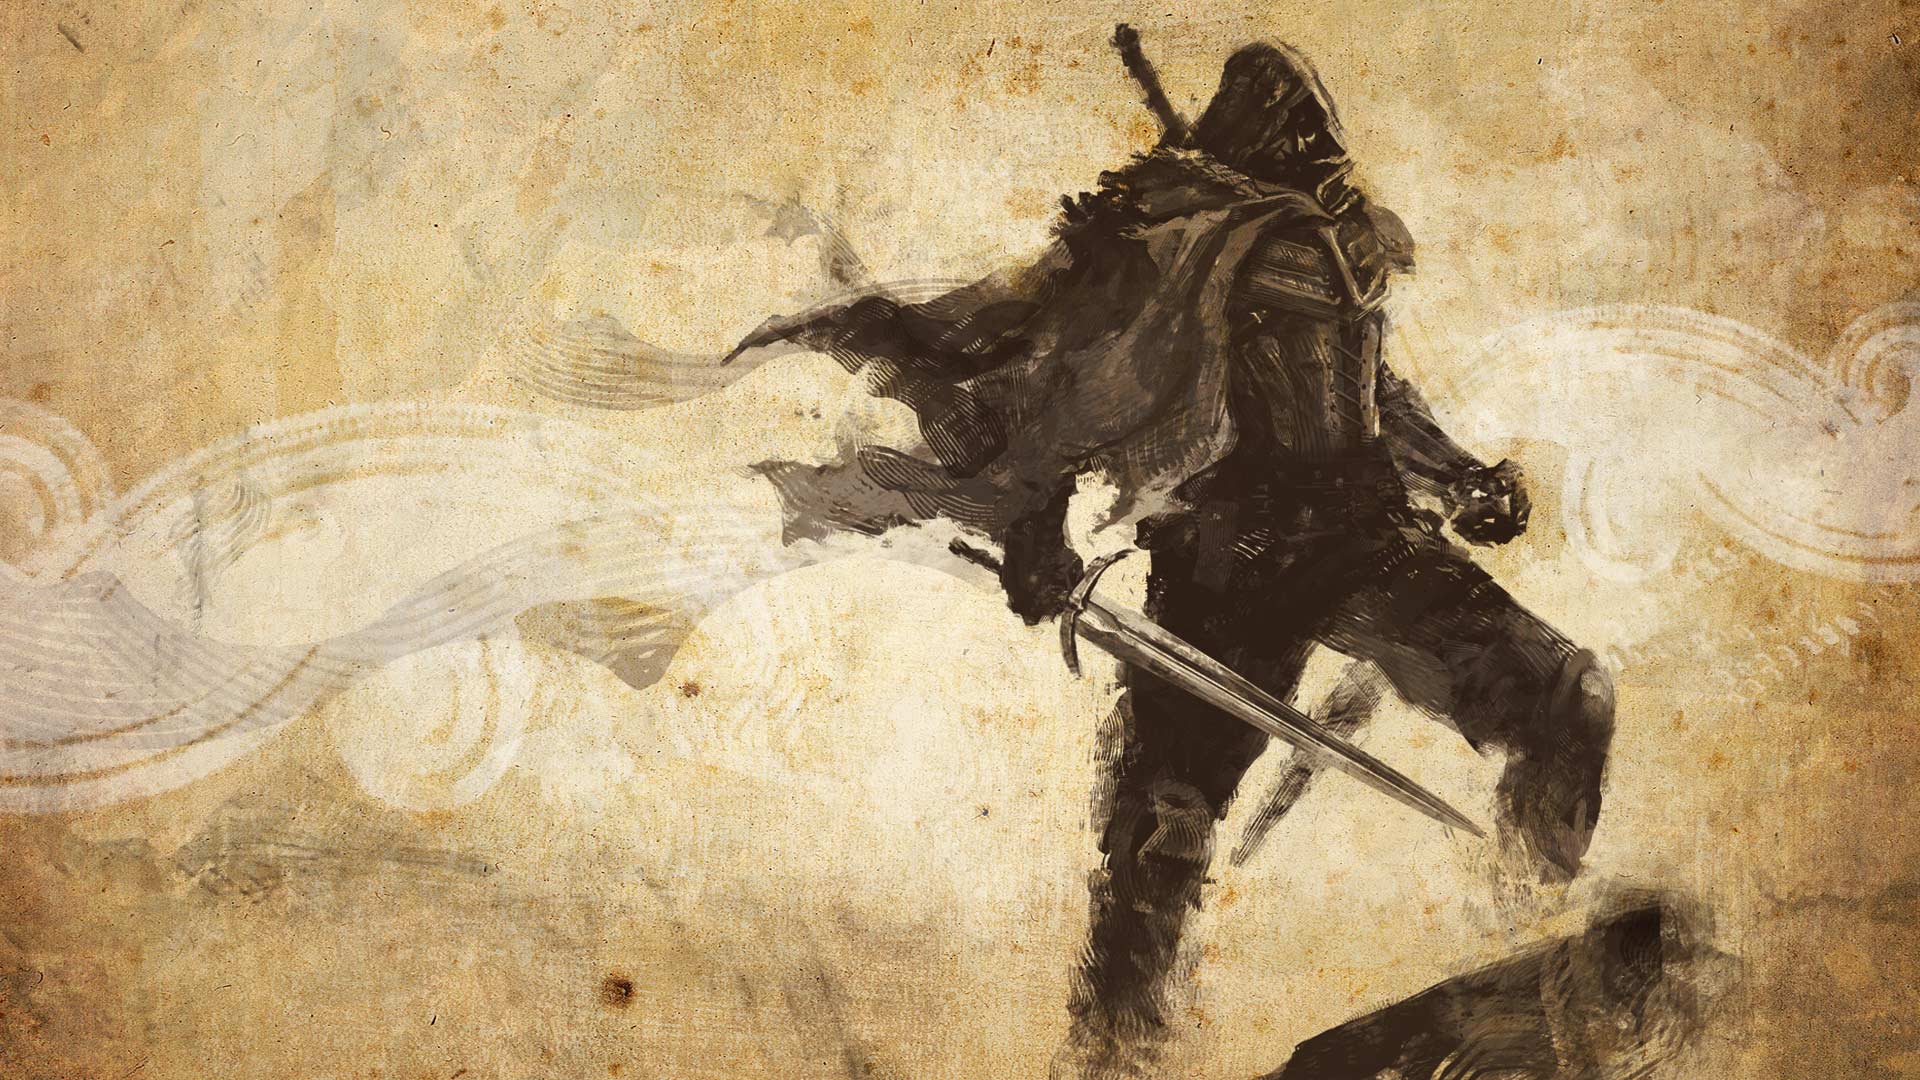 video game, joe dever's lone wolf hd remastered, cloak, concept art, sword, warrior High Definition image